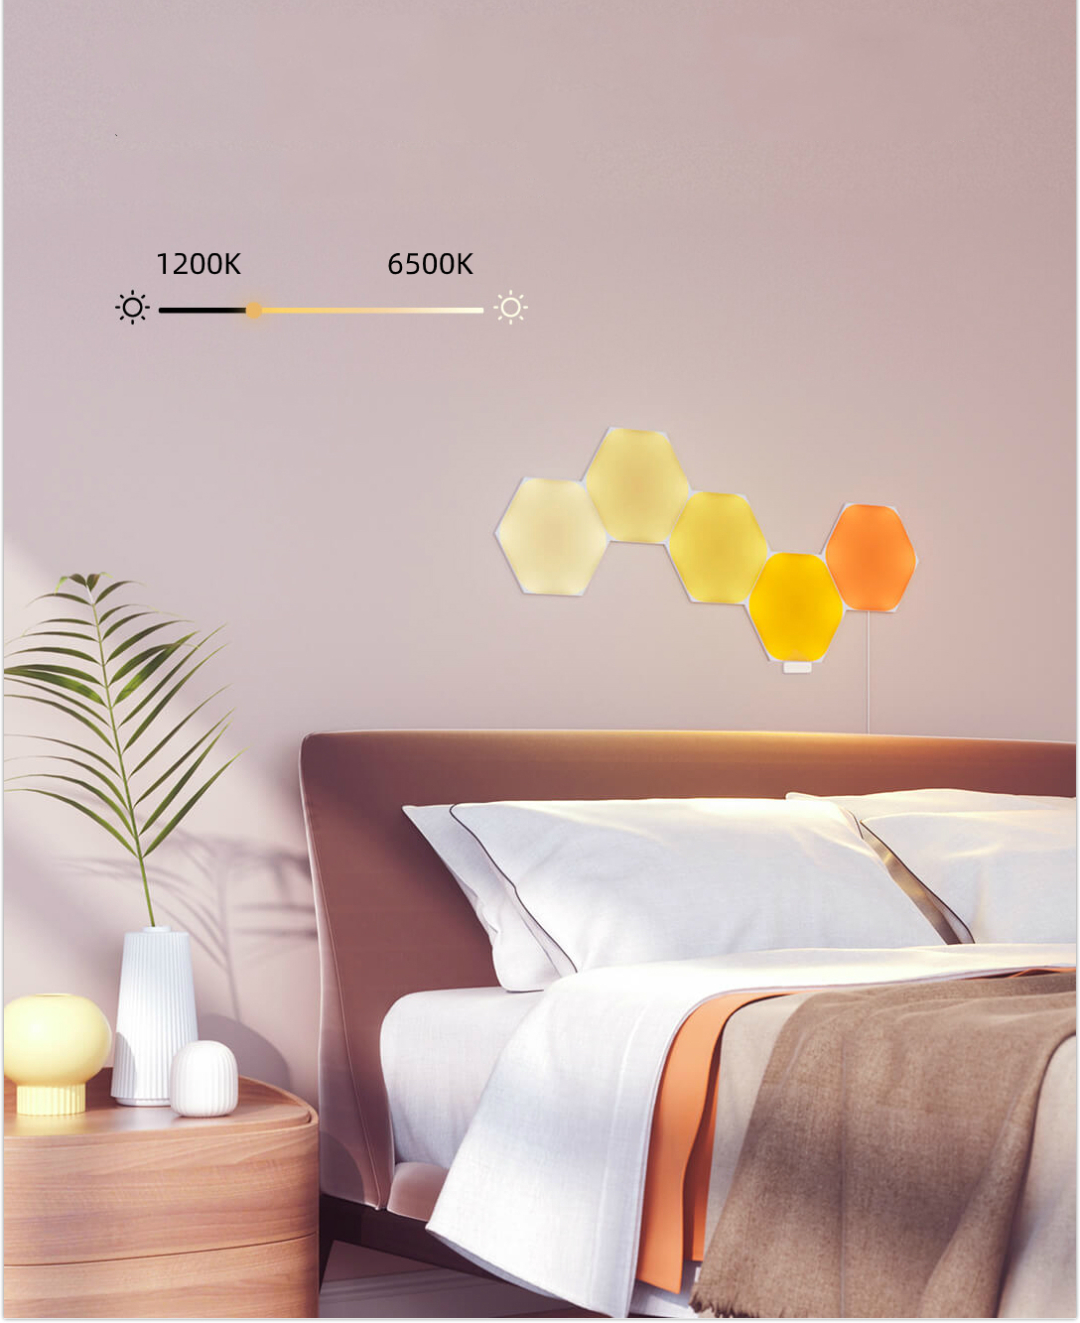 Nanoleaf-Shapes-Hexagons-Wifi-Smart-LED-Light-Kit-DIY-Night-Lamp-Touch-Voice-APP-Control-16-Million--1723333-6